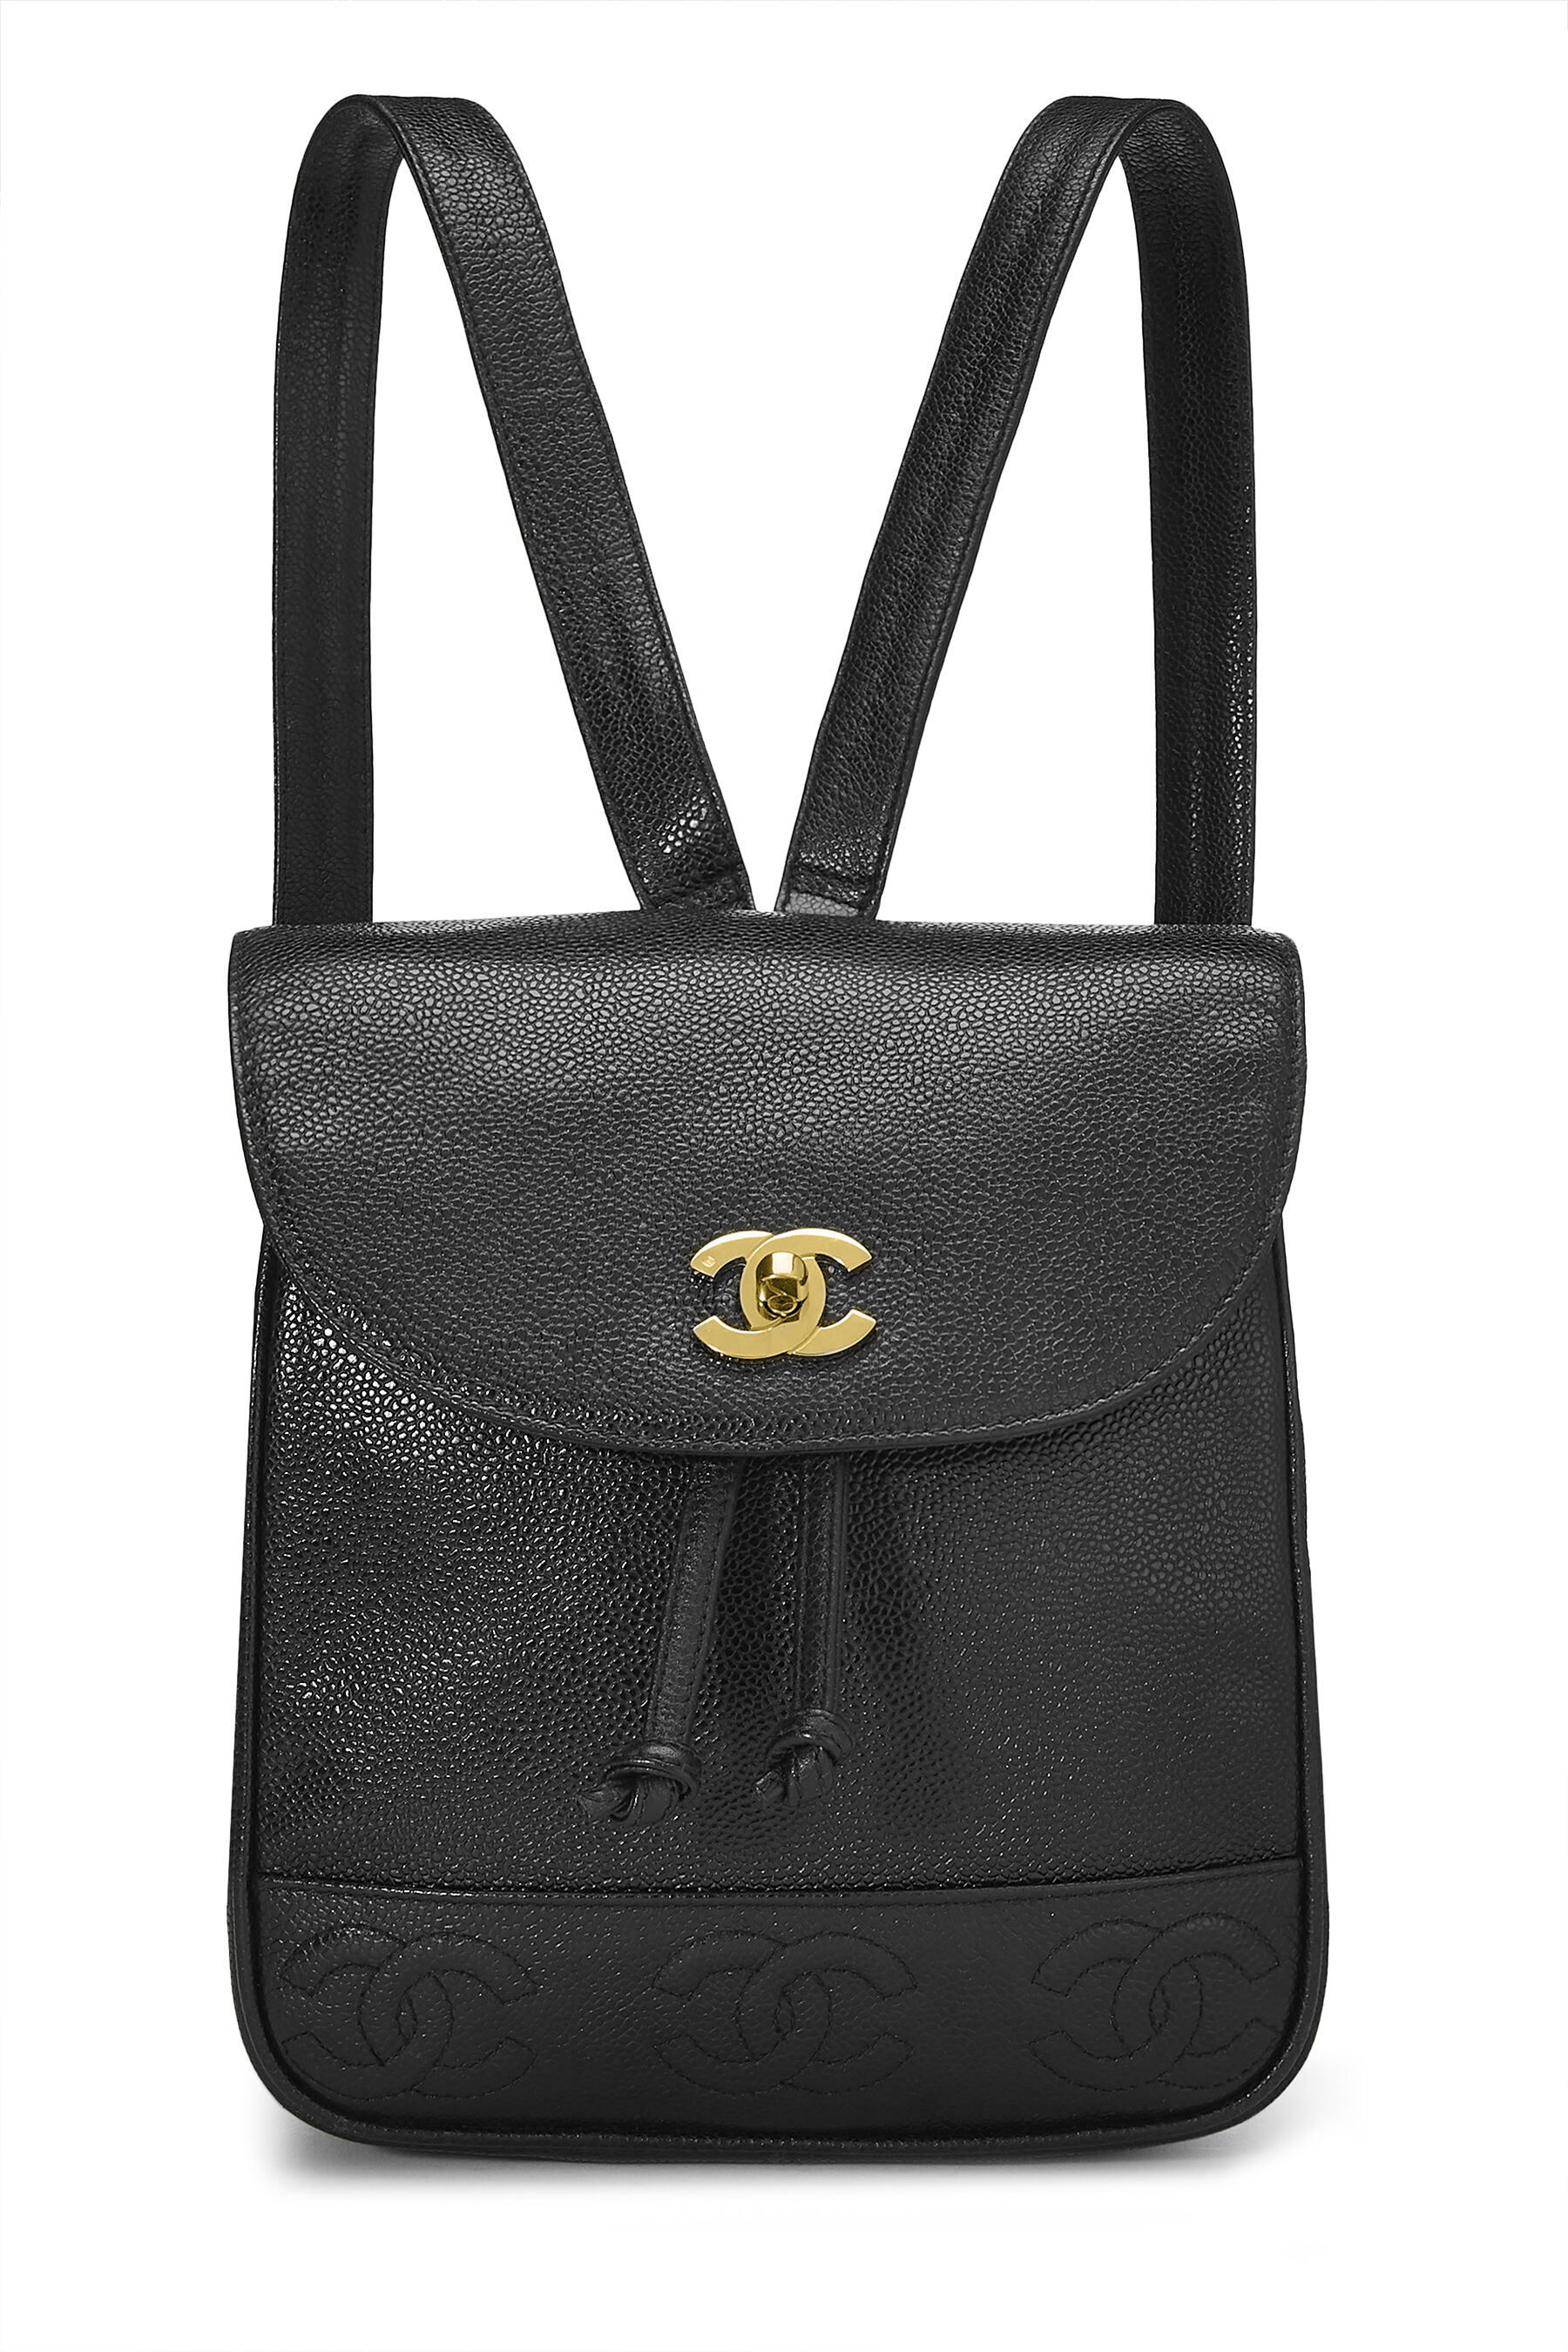 Chanel - Black Caviar 3 CC Backpack Small